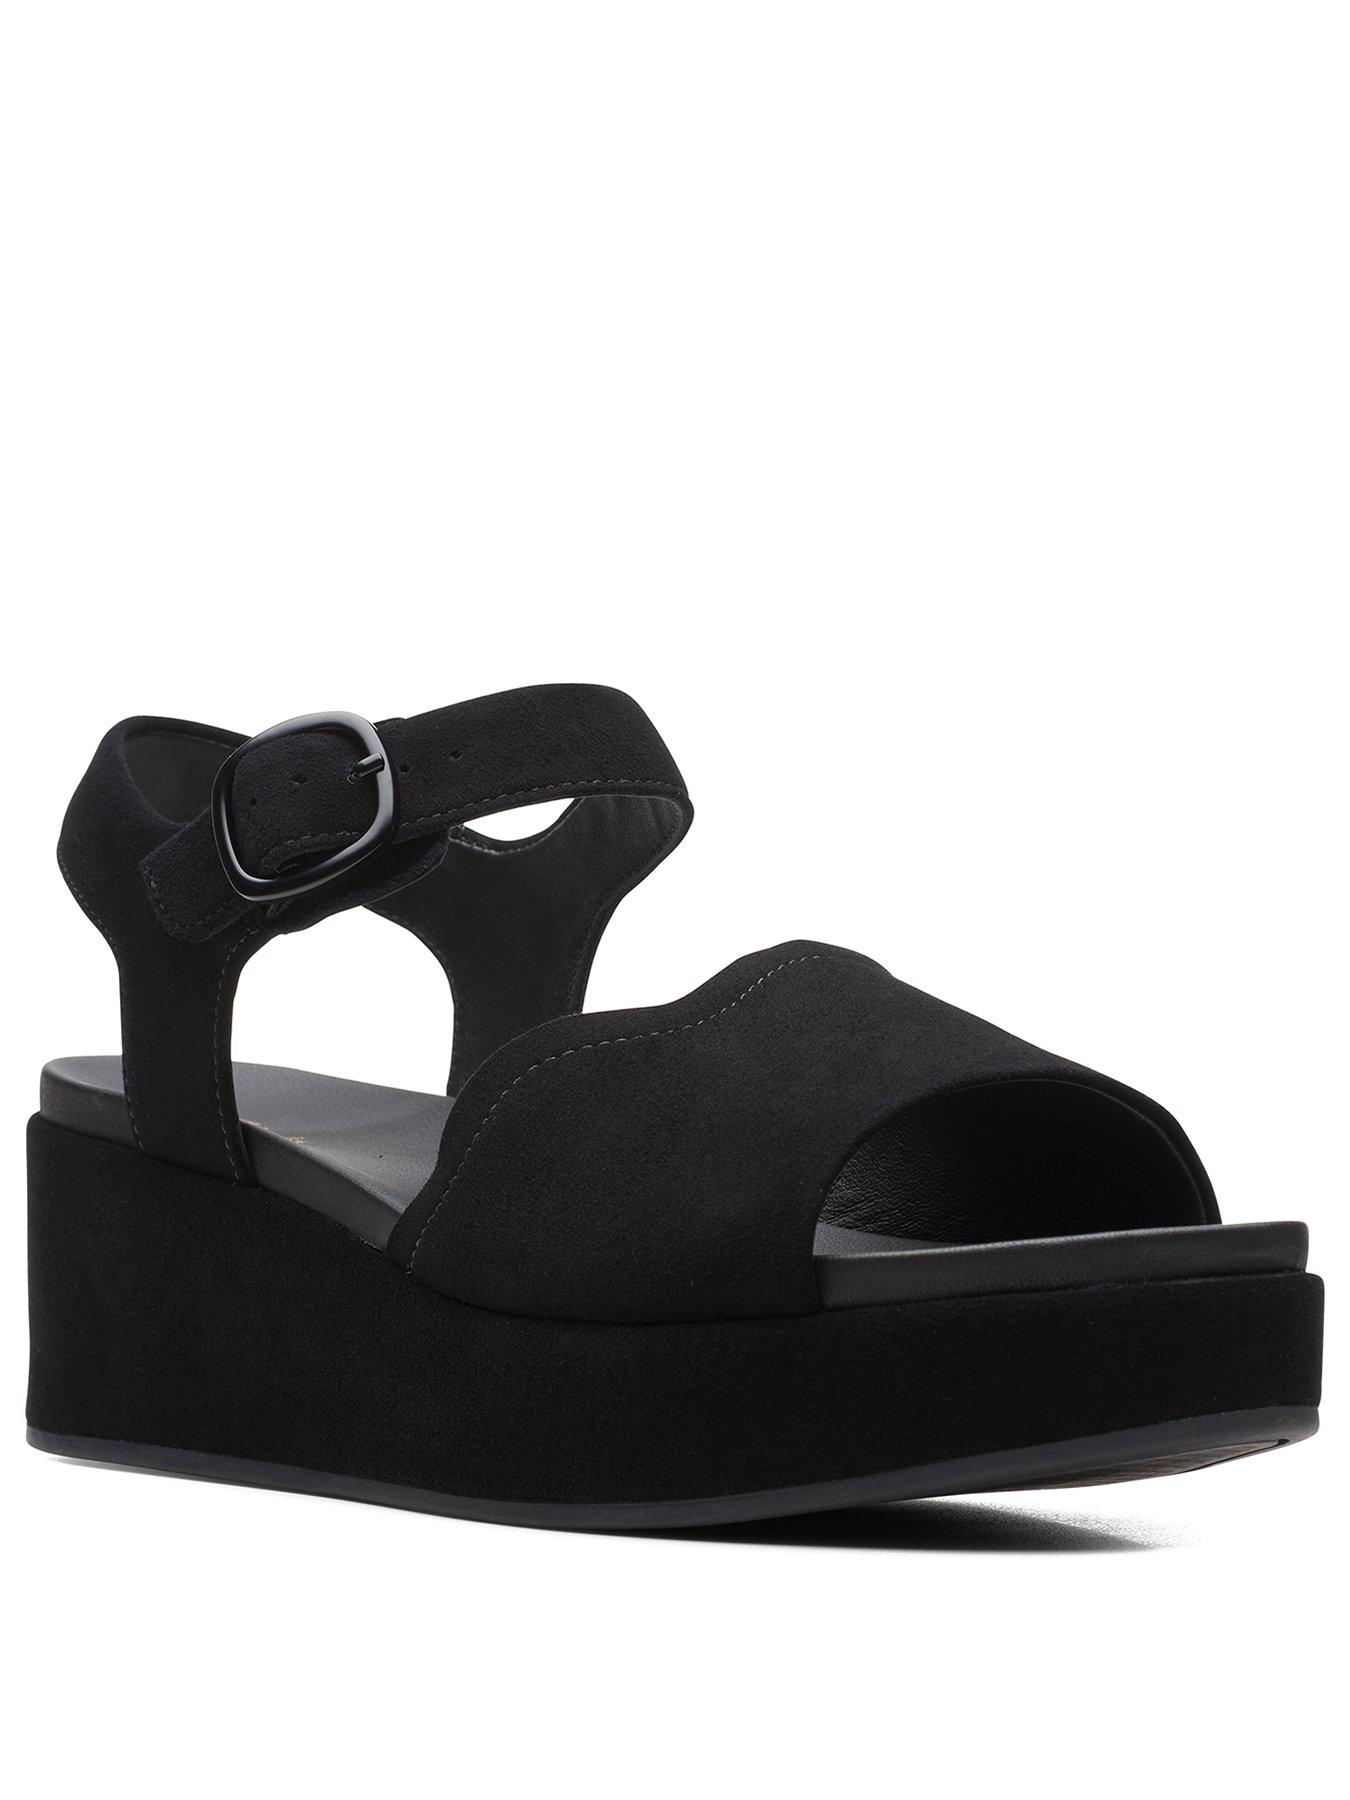 clarks black suede wedge sandals